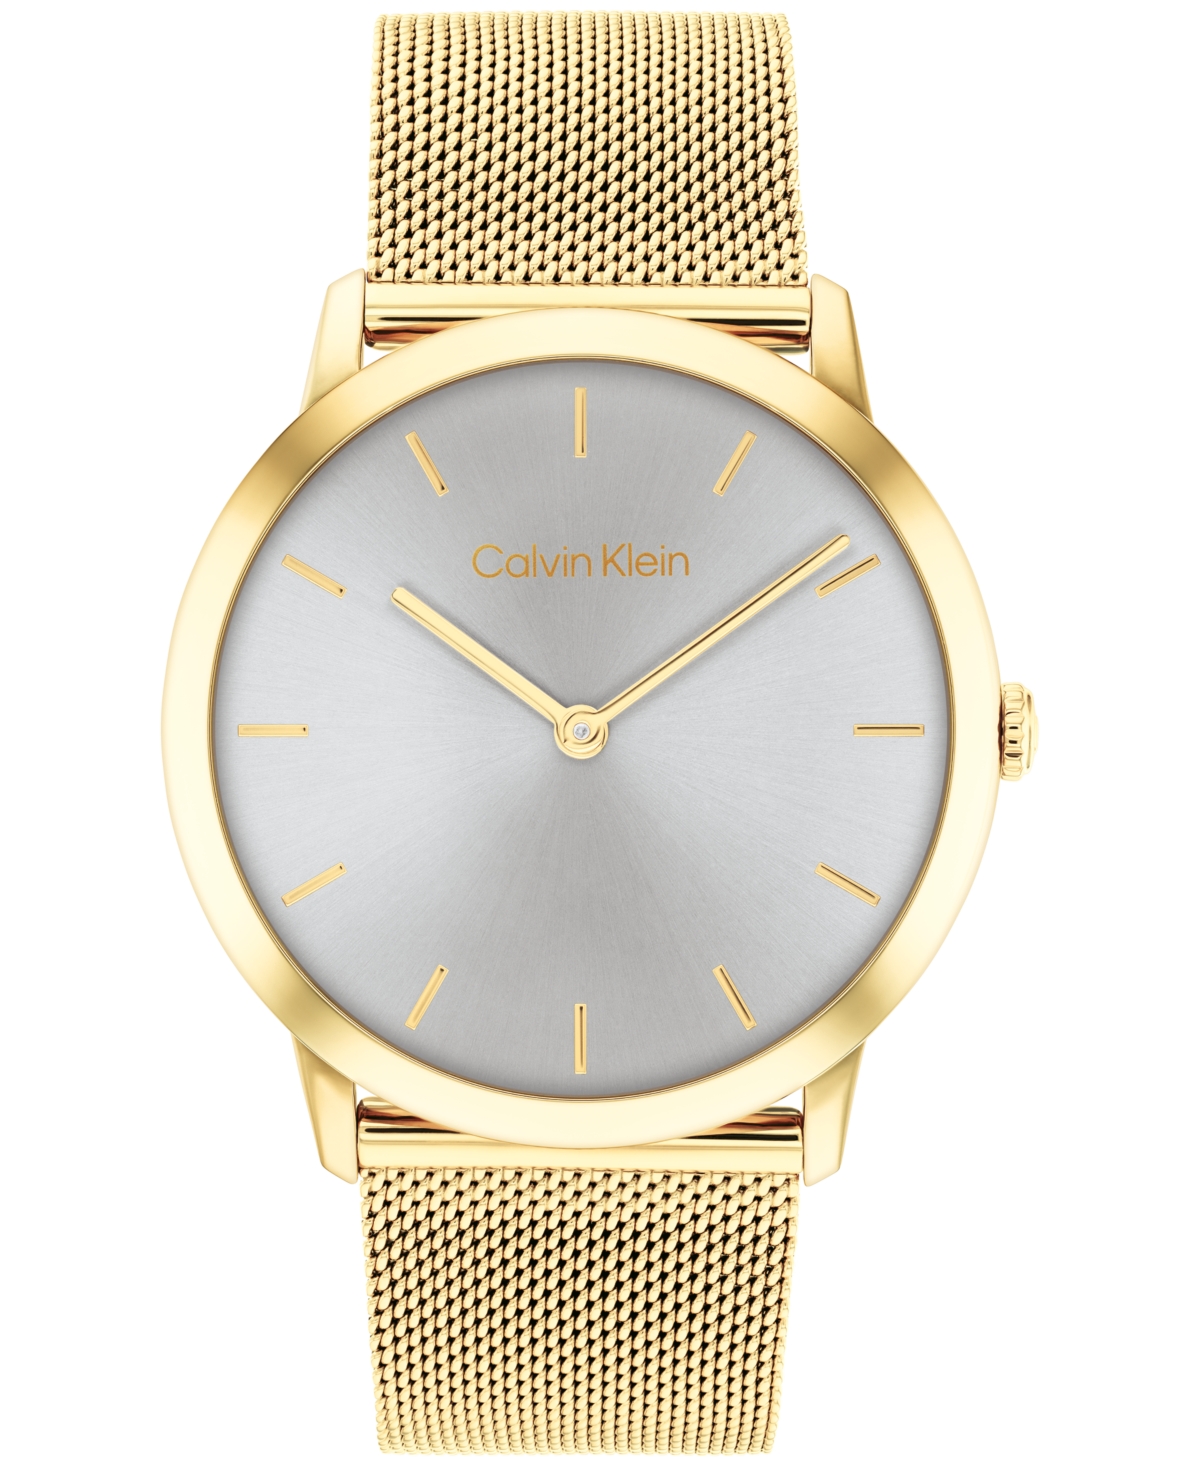 Calvin Klein Women's Exceptional Gold-tone Stainless Steel Mesh Bracelet Watch 37mm